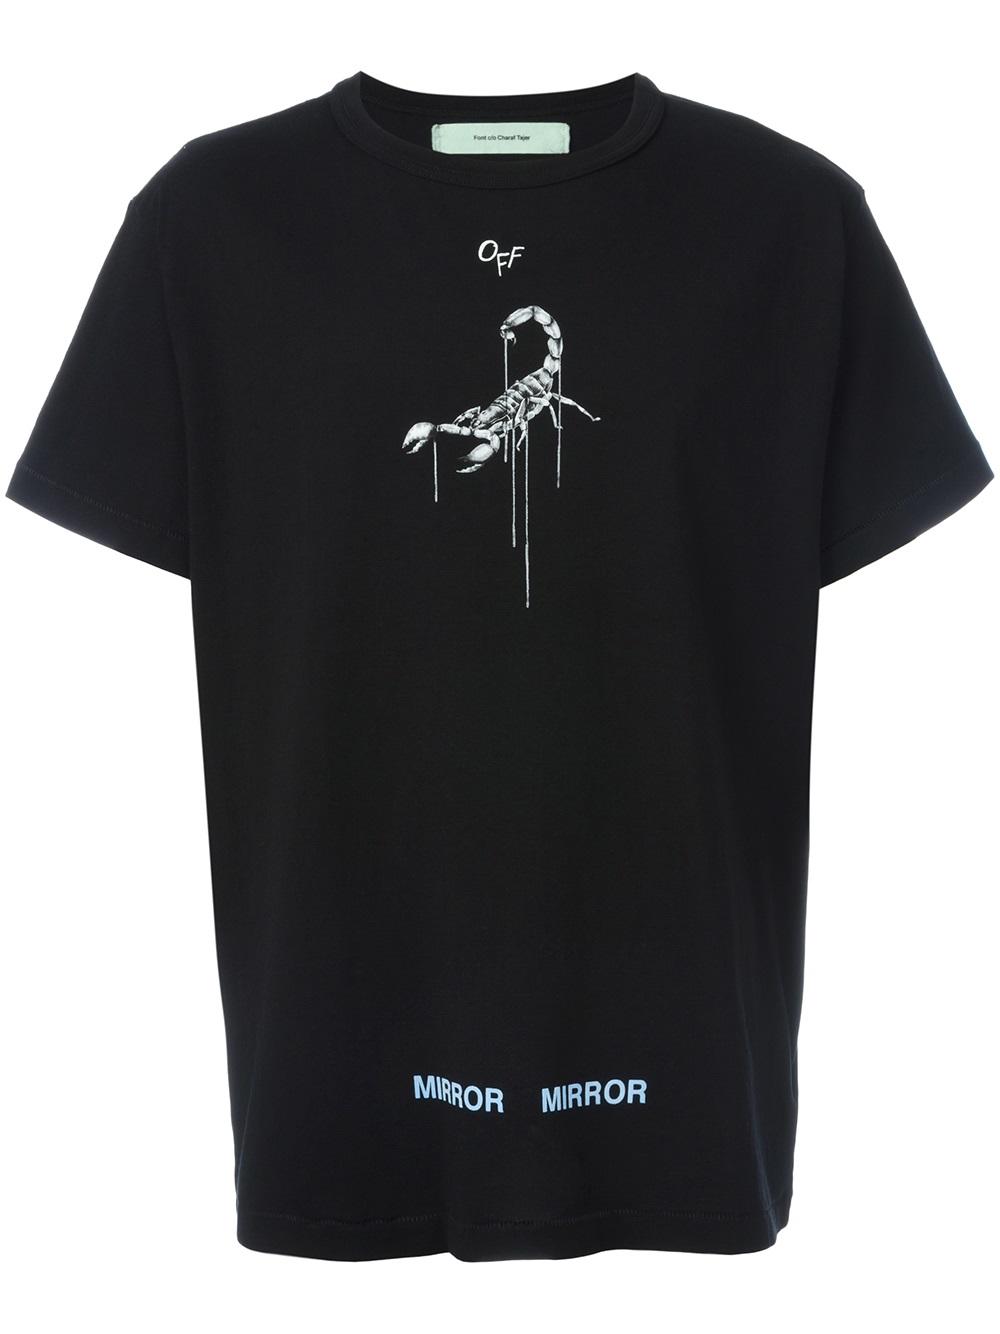 Off-White Othelo\'s Scorpion T-shirt BLACK Men Clothing T-Shirts